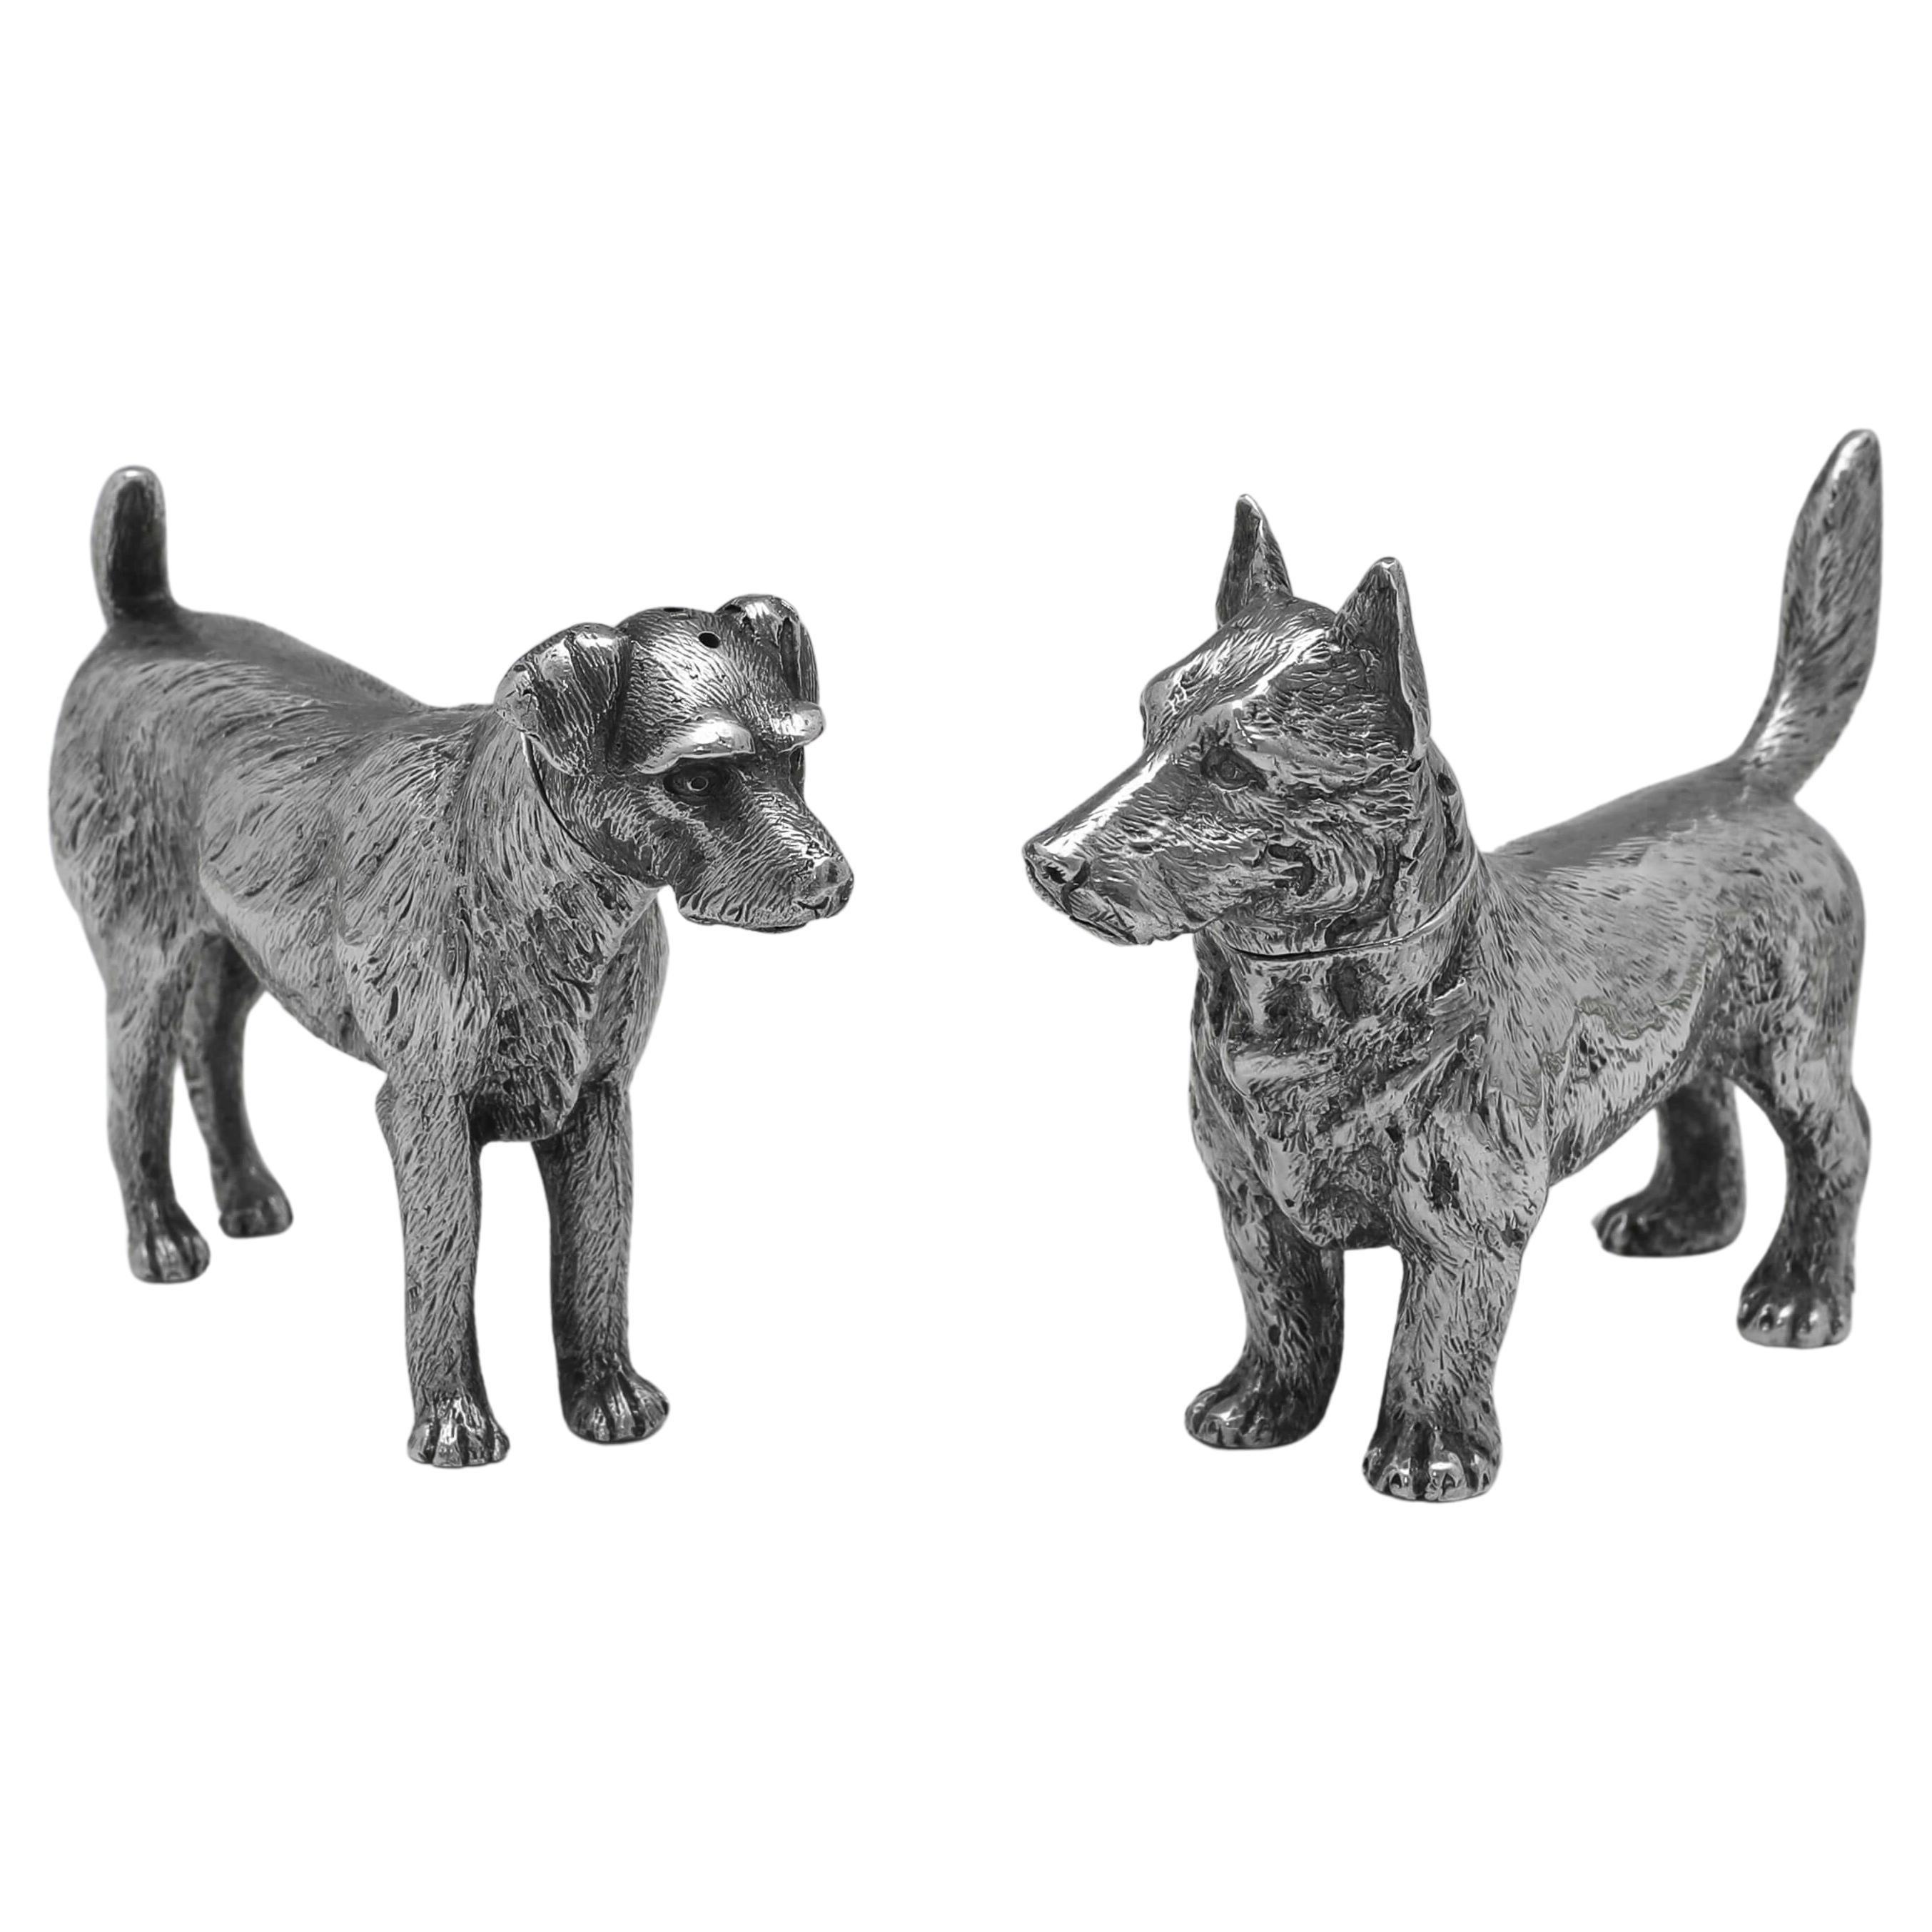 Seltenes Paar edwardianischer Hunde-Pfefferstreuer aus Sterlingsilber - Terrier-Modelle - 1904 im Angebot